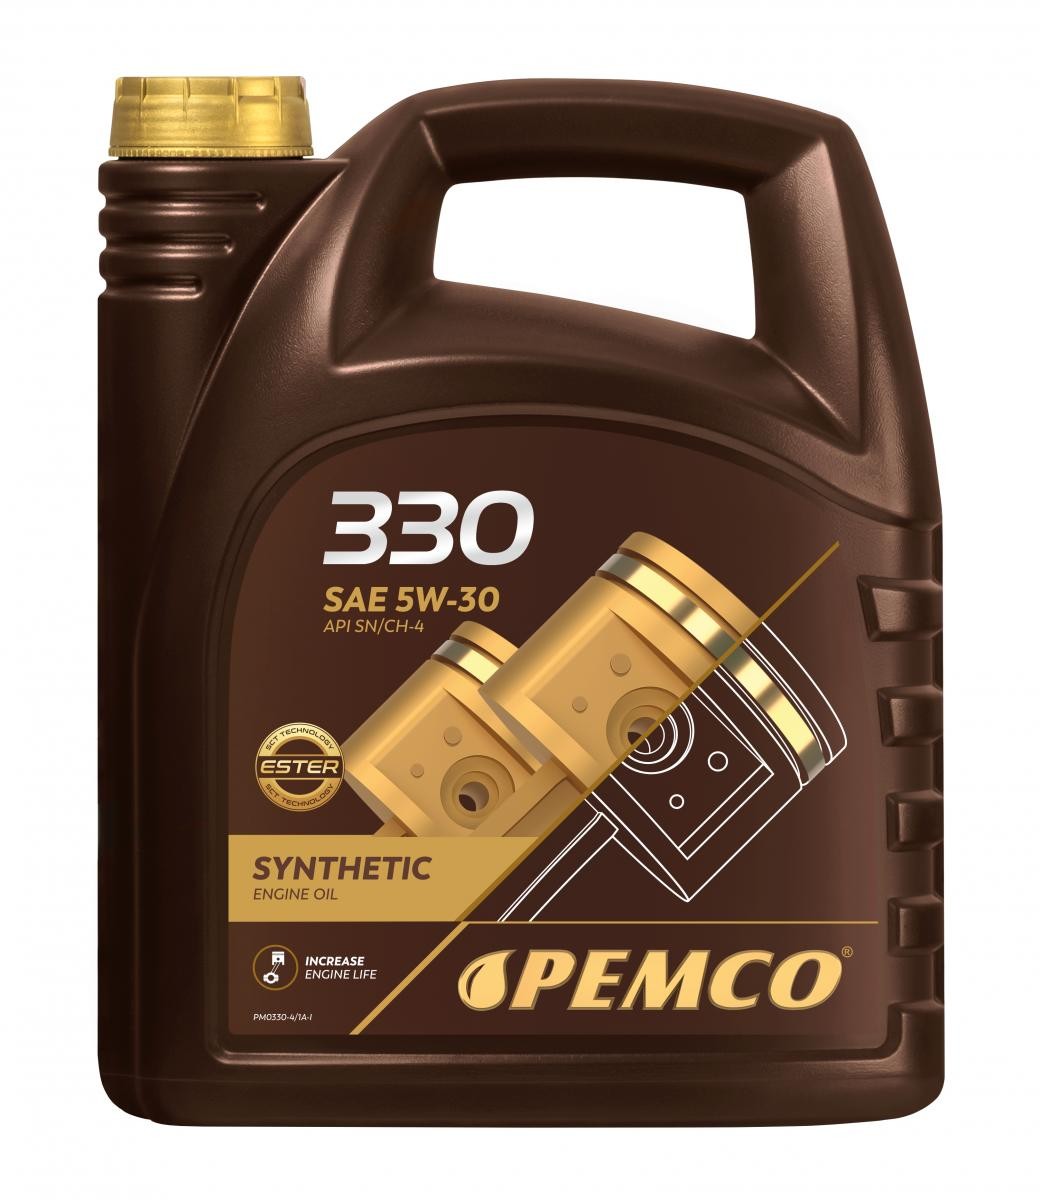 PEMCO iDRIVE 300, iDRIVE 330 PM0330-4 Engine oil 5W-30, 4l, Synthetic Oil